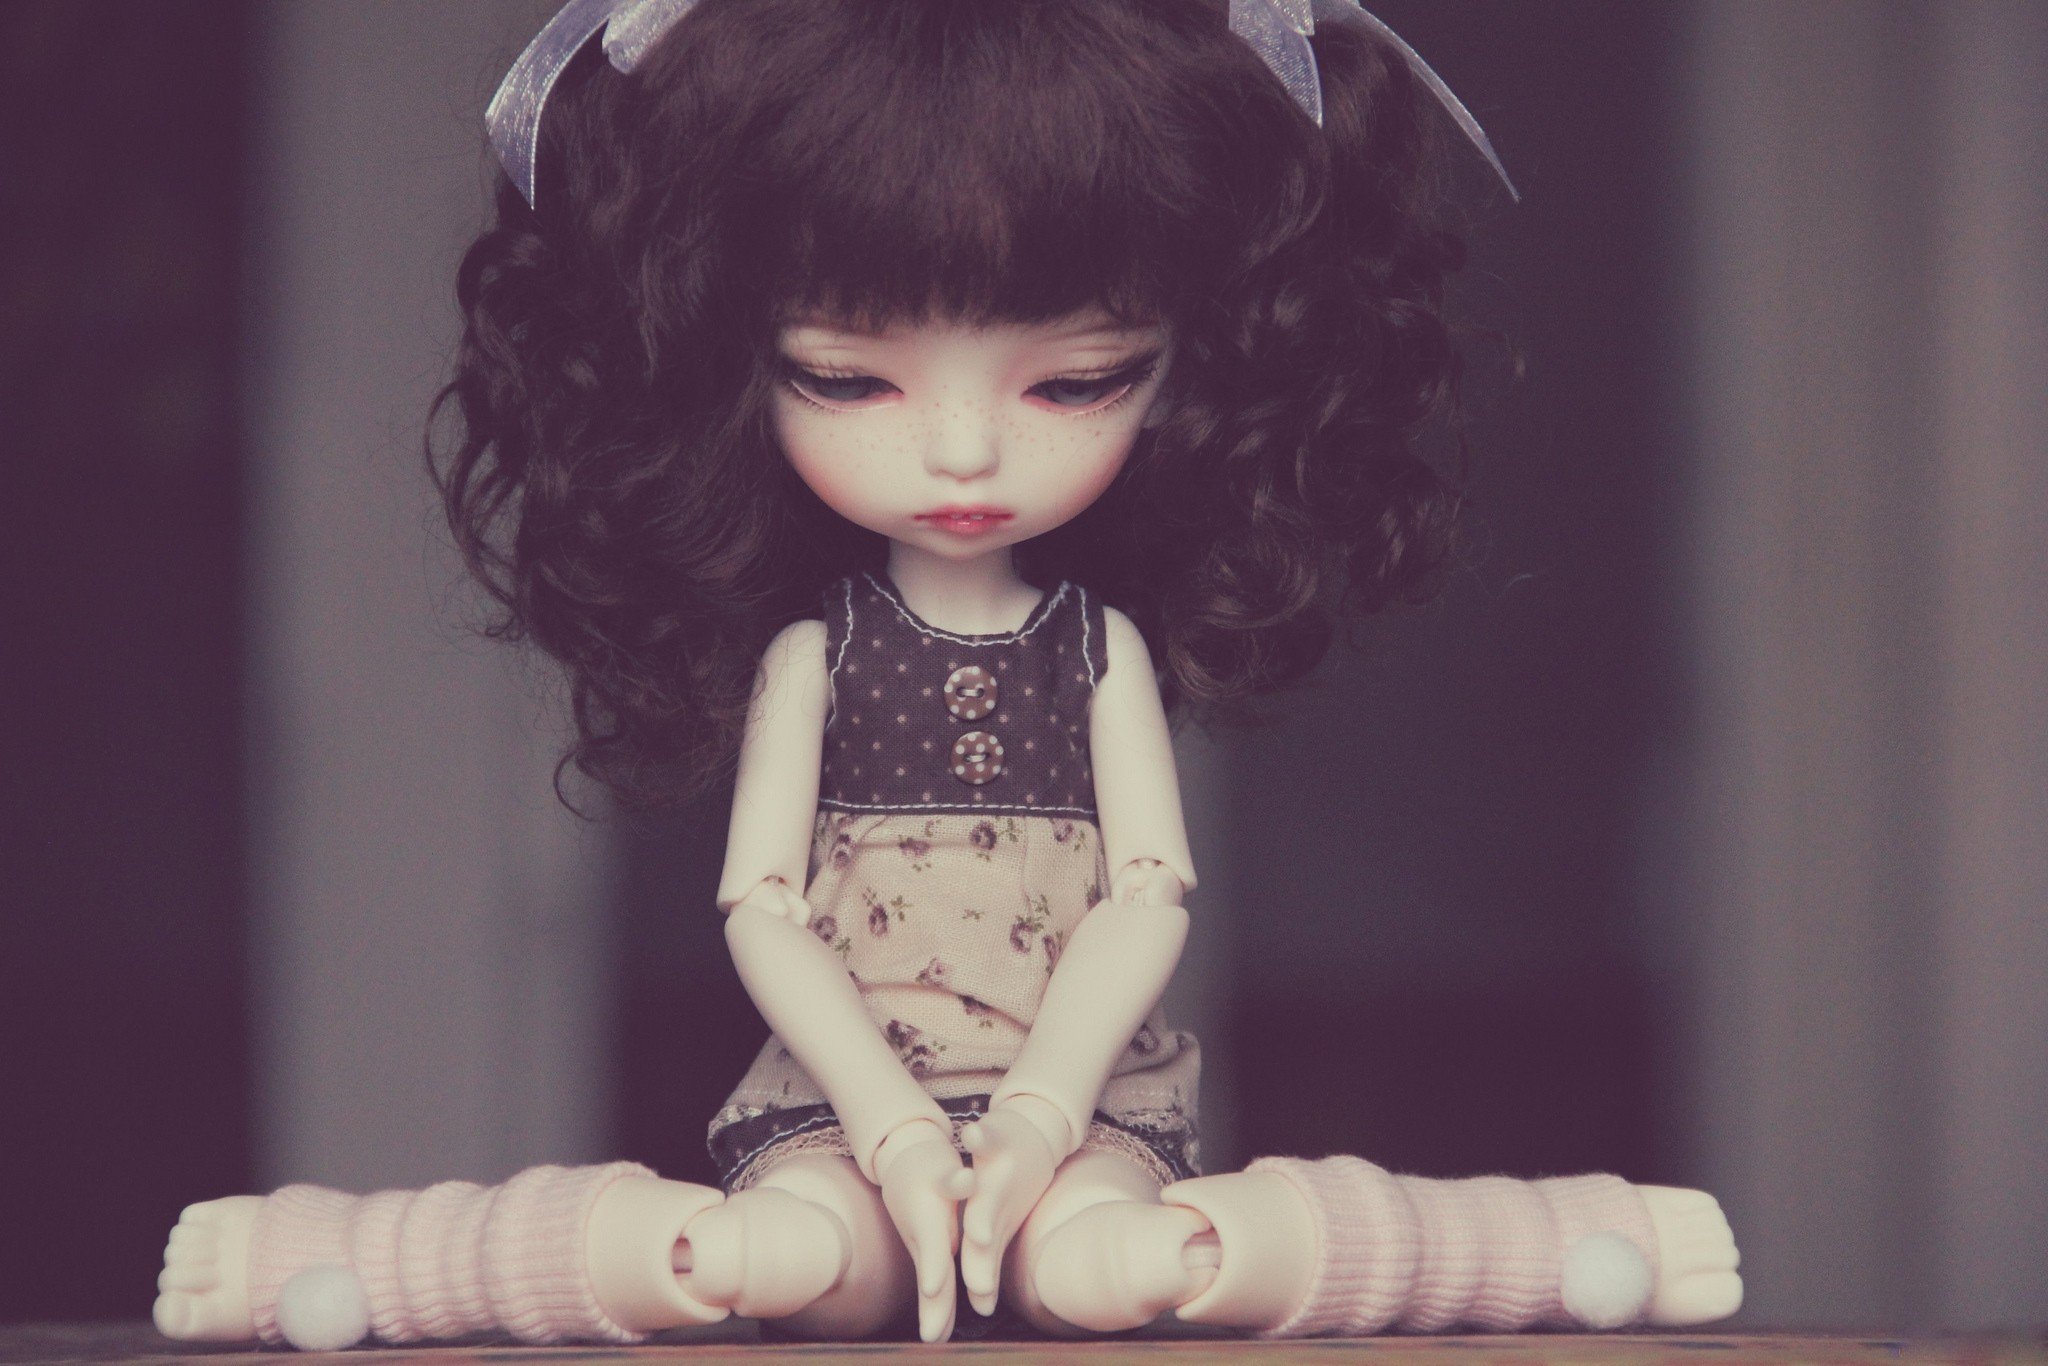 mood babier doll so sad photo cool sadness alone hd wallpaper 2048x1366